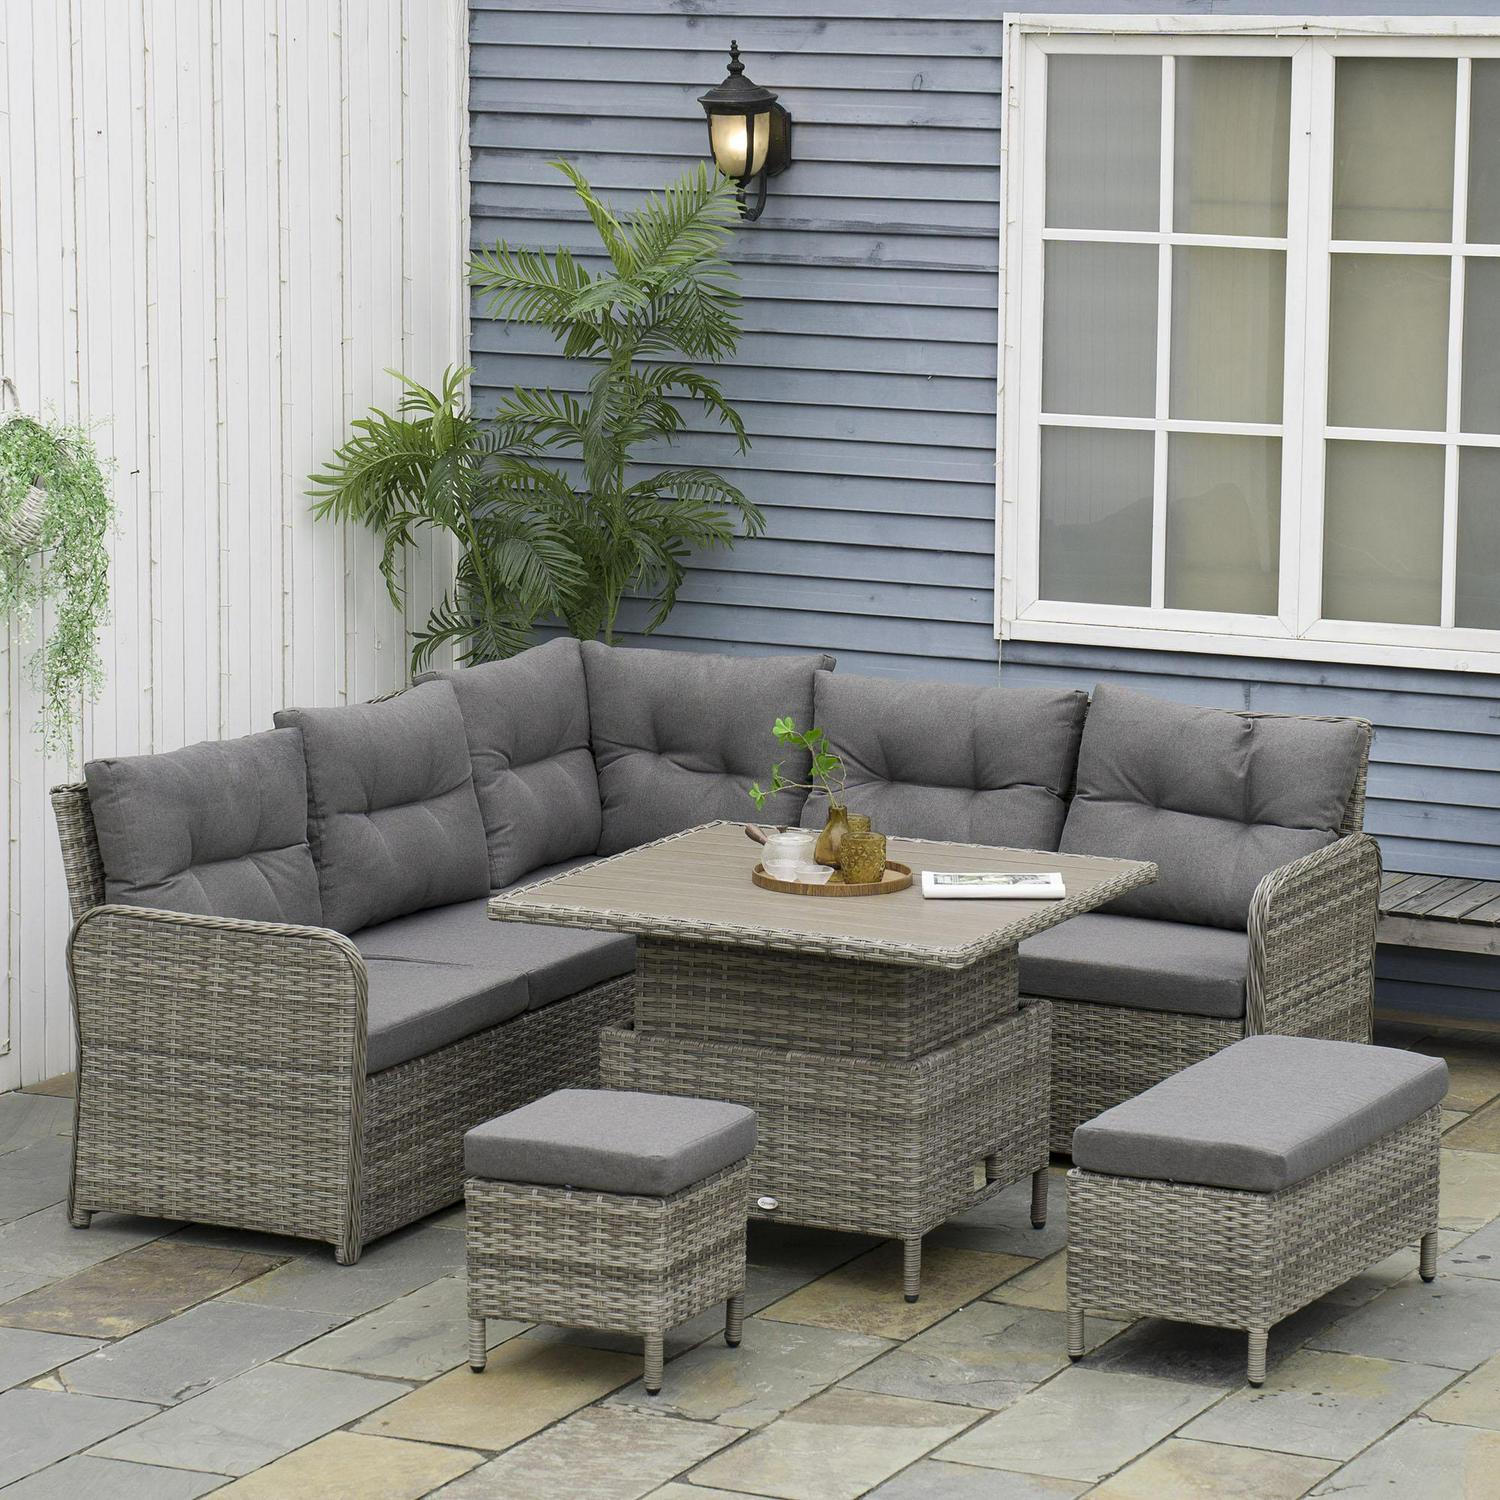 6 Pieces Outdoor PE Rattan Garden Furniture- Grey